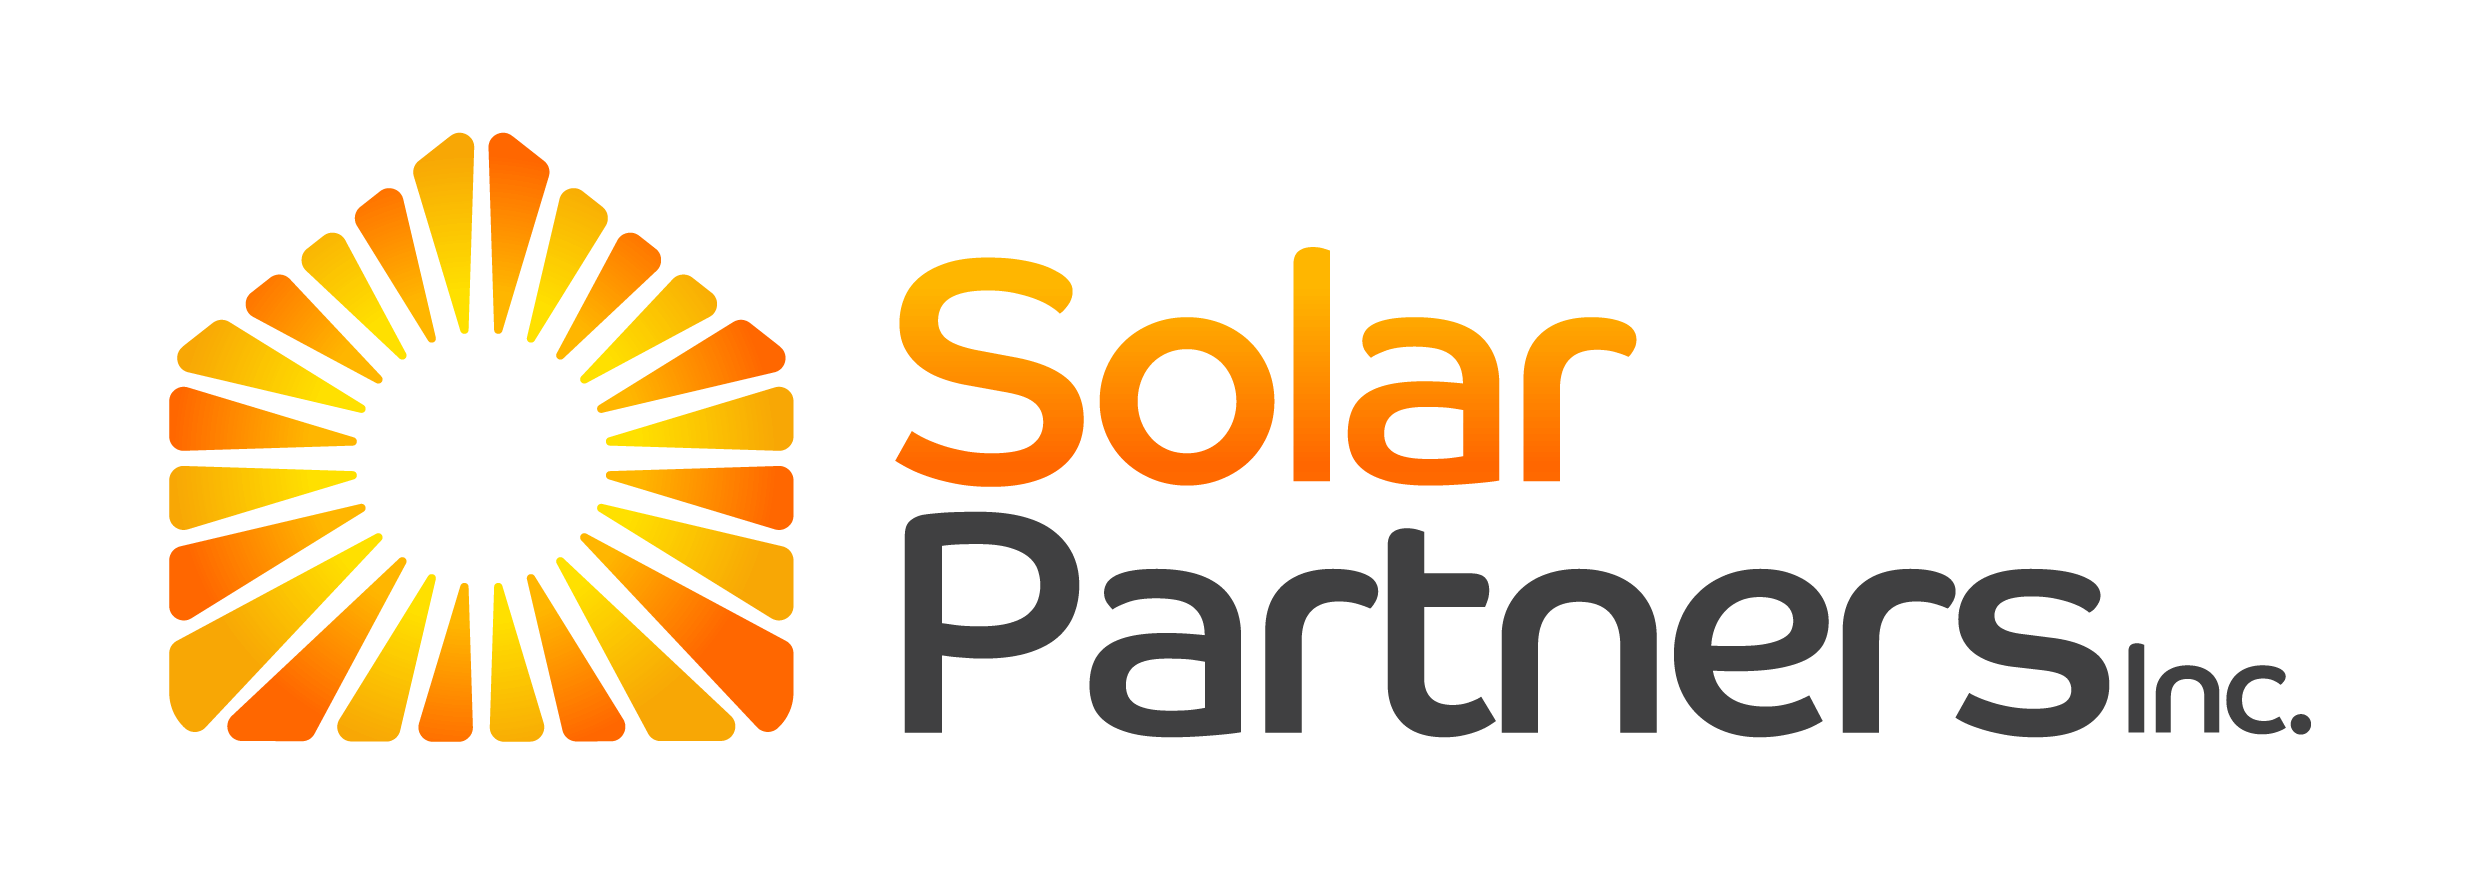 solar partners web logo